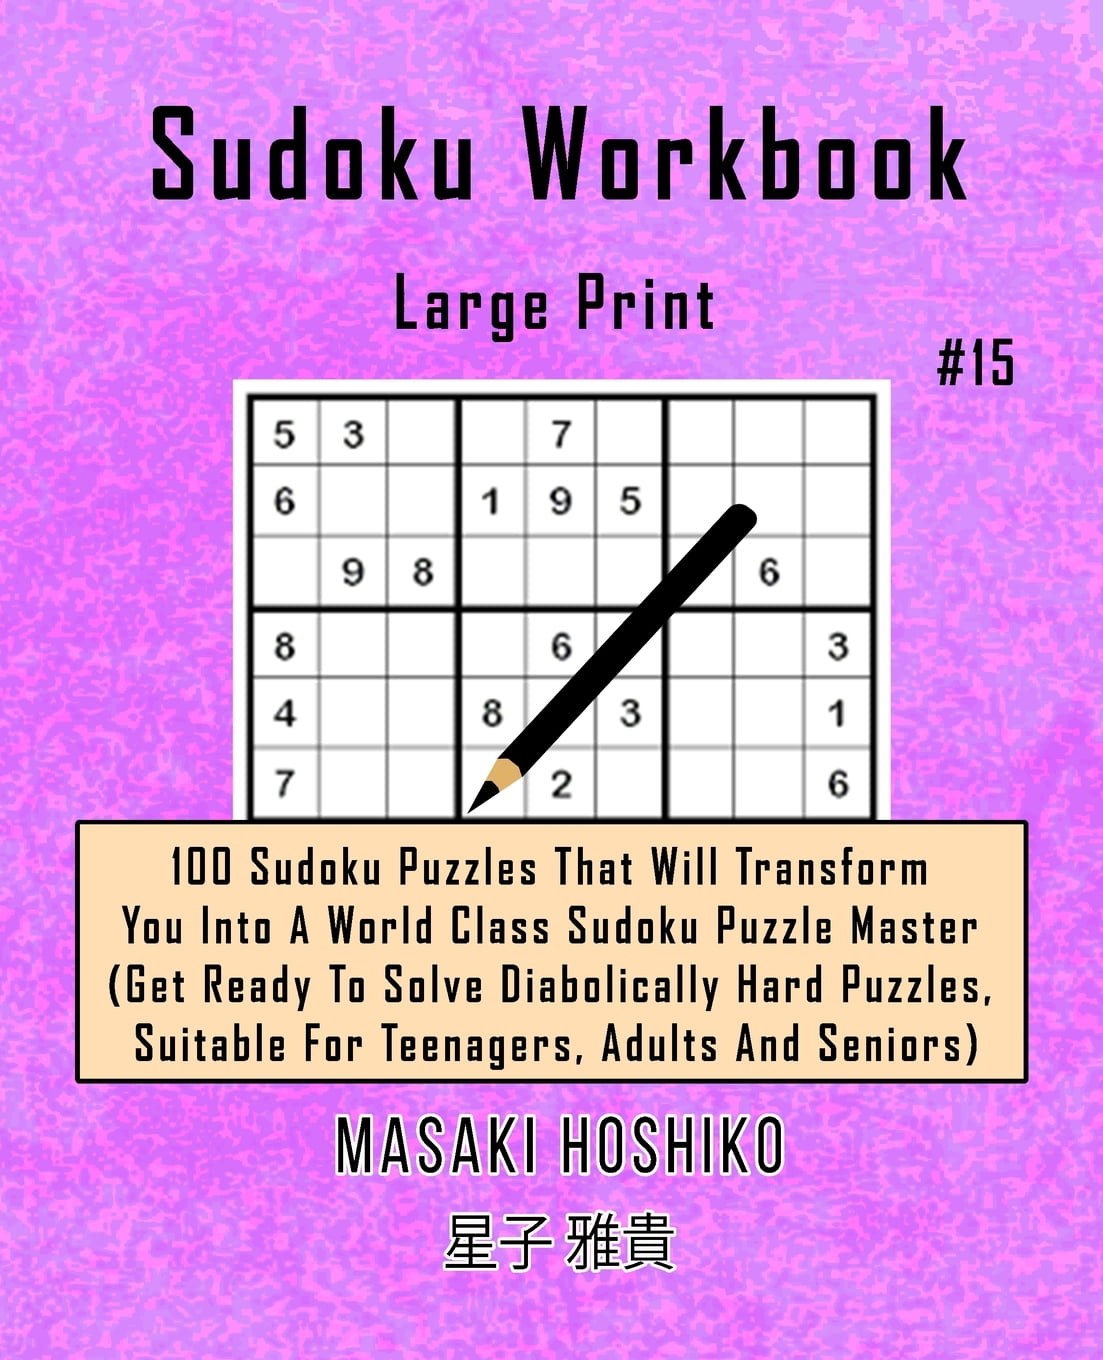 Download Sudoku Workbook-Large Print #15: 100 Sudoku Puzzles That ...